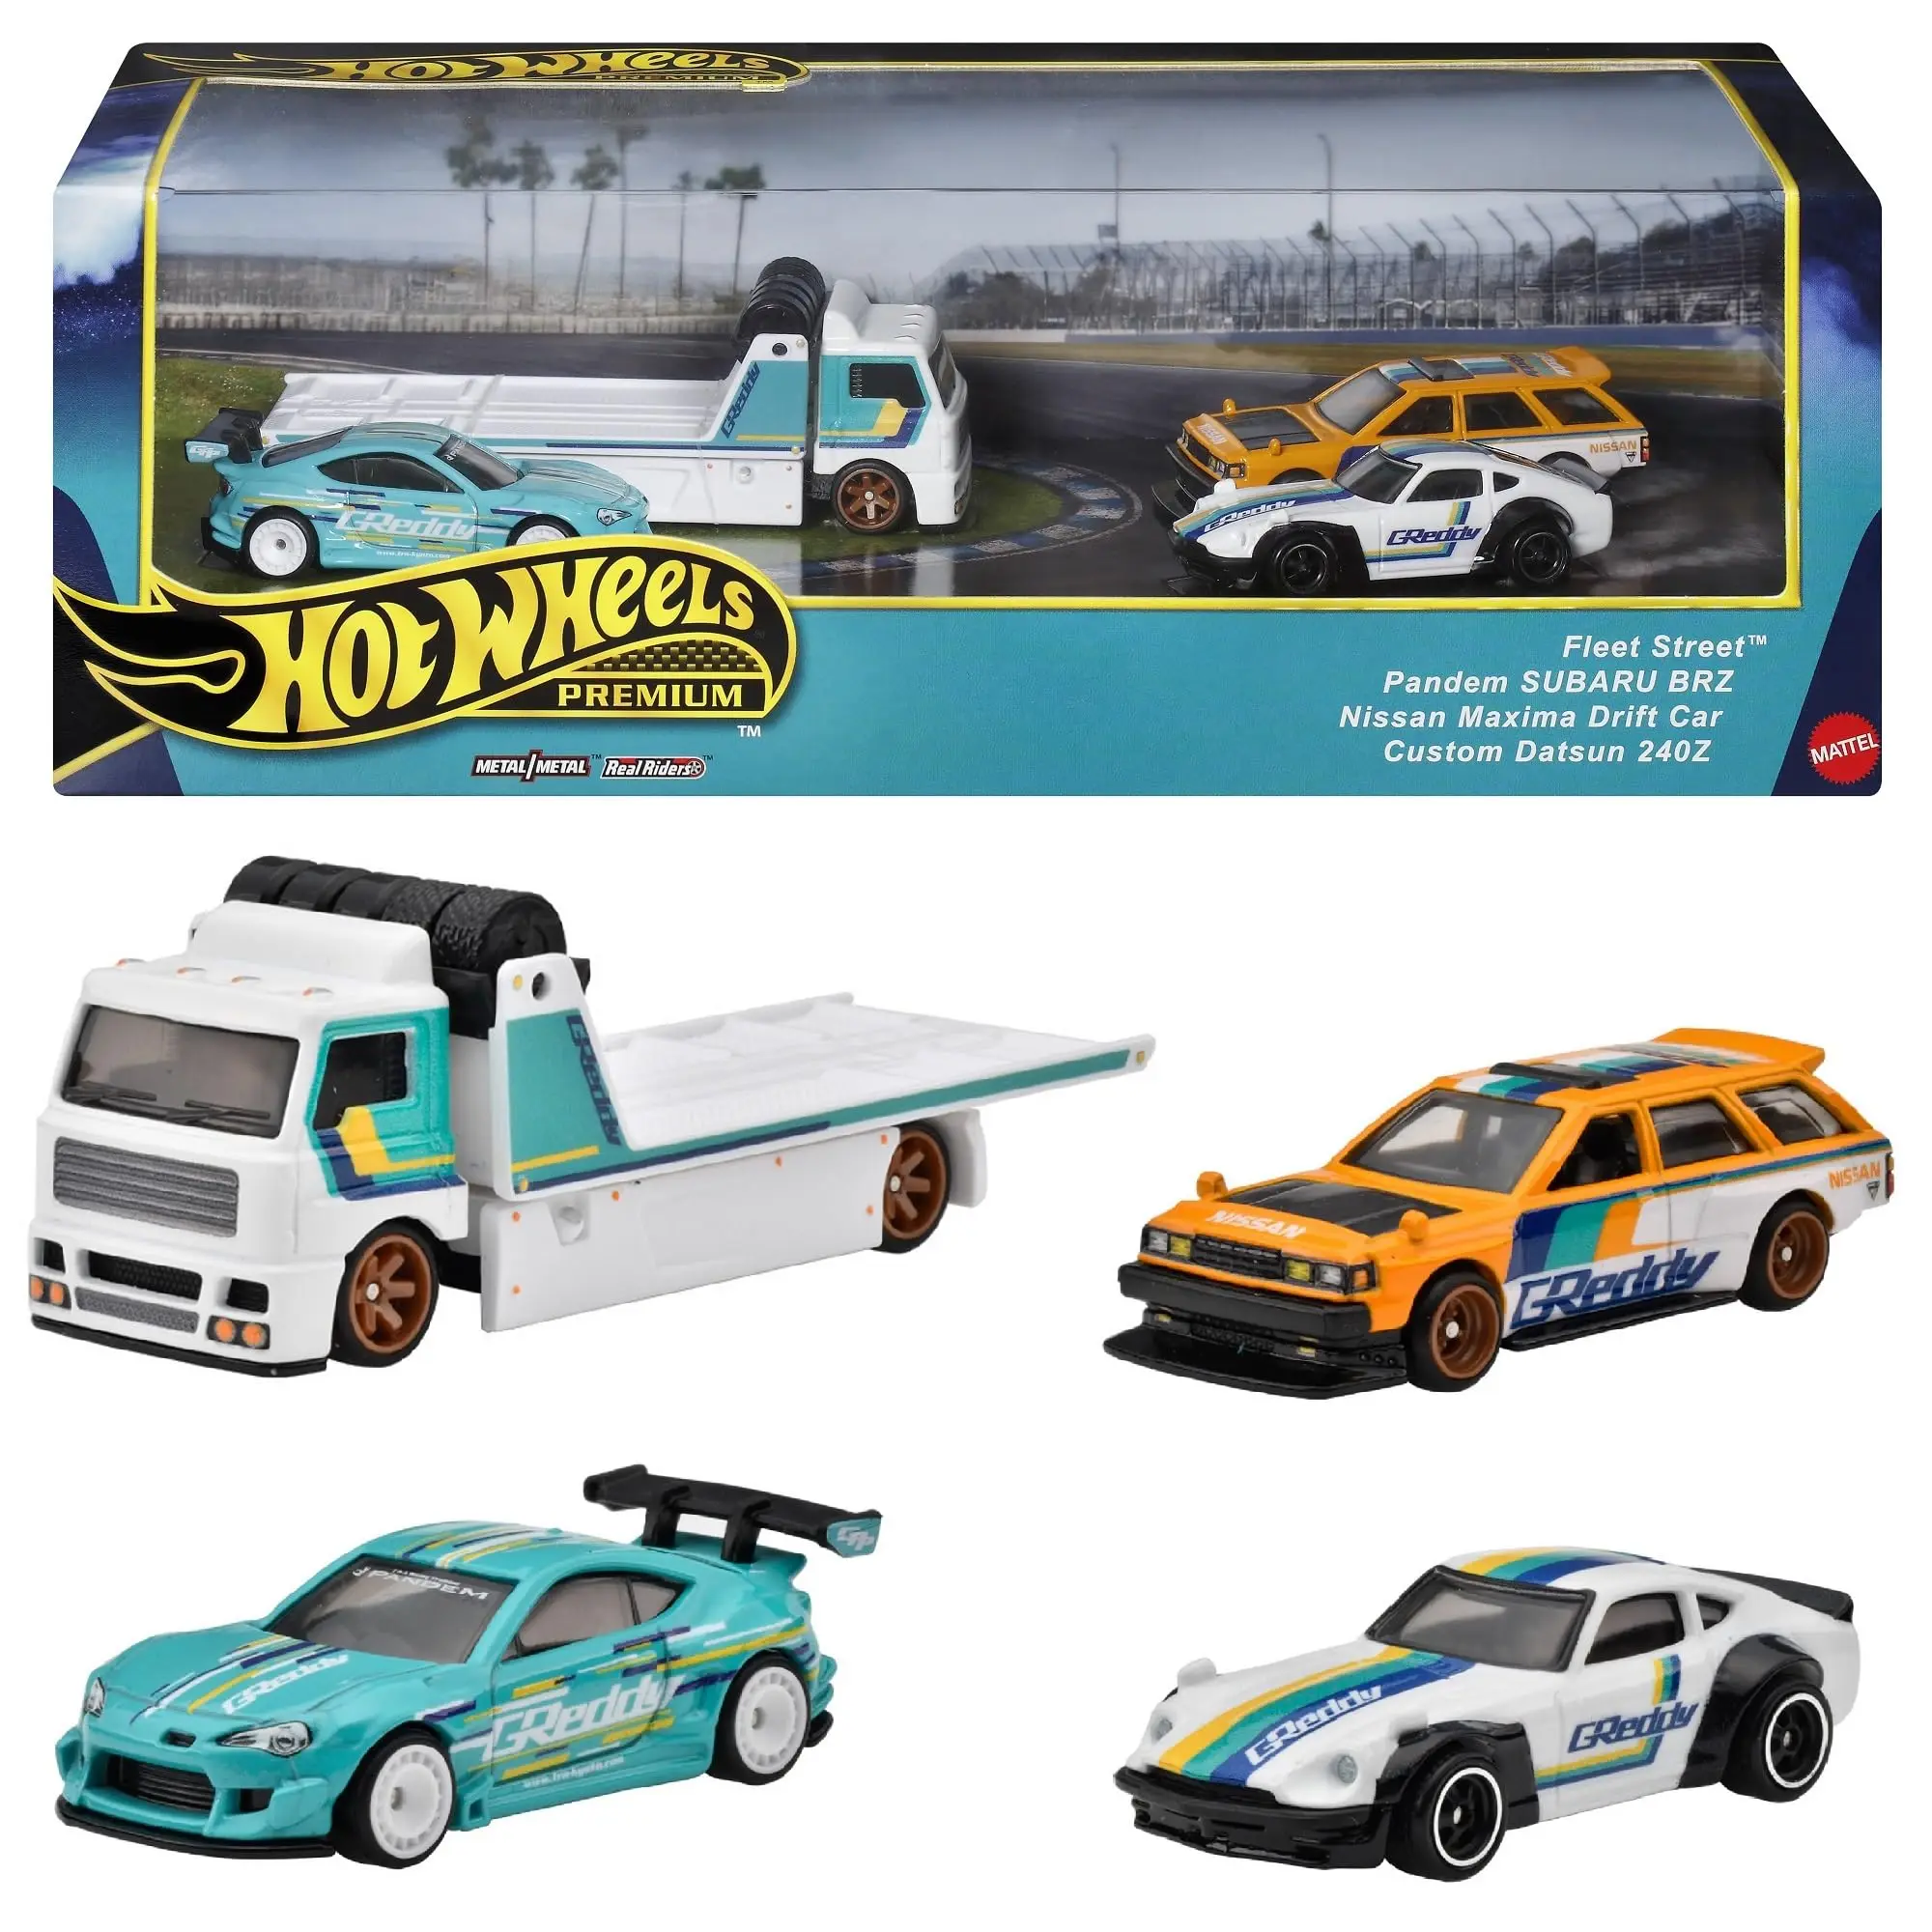 

Hot Wheels 1:64 Pandem Subaru BRZ+Nissan Maxima Drift Car+Custom Dats Garage Series Collector Edition Metal Diet Model Cars Toys